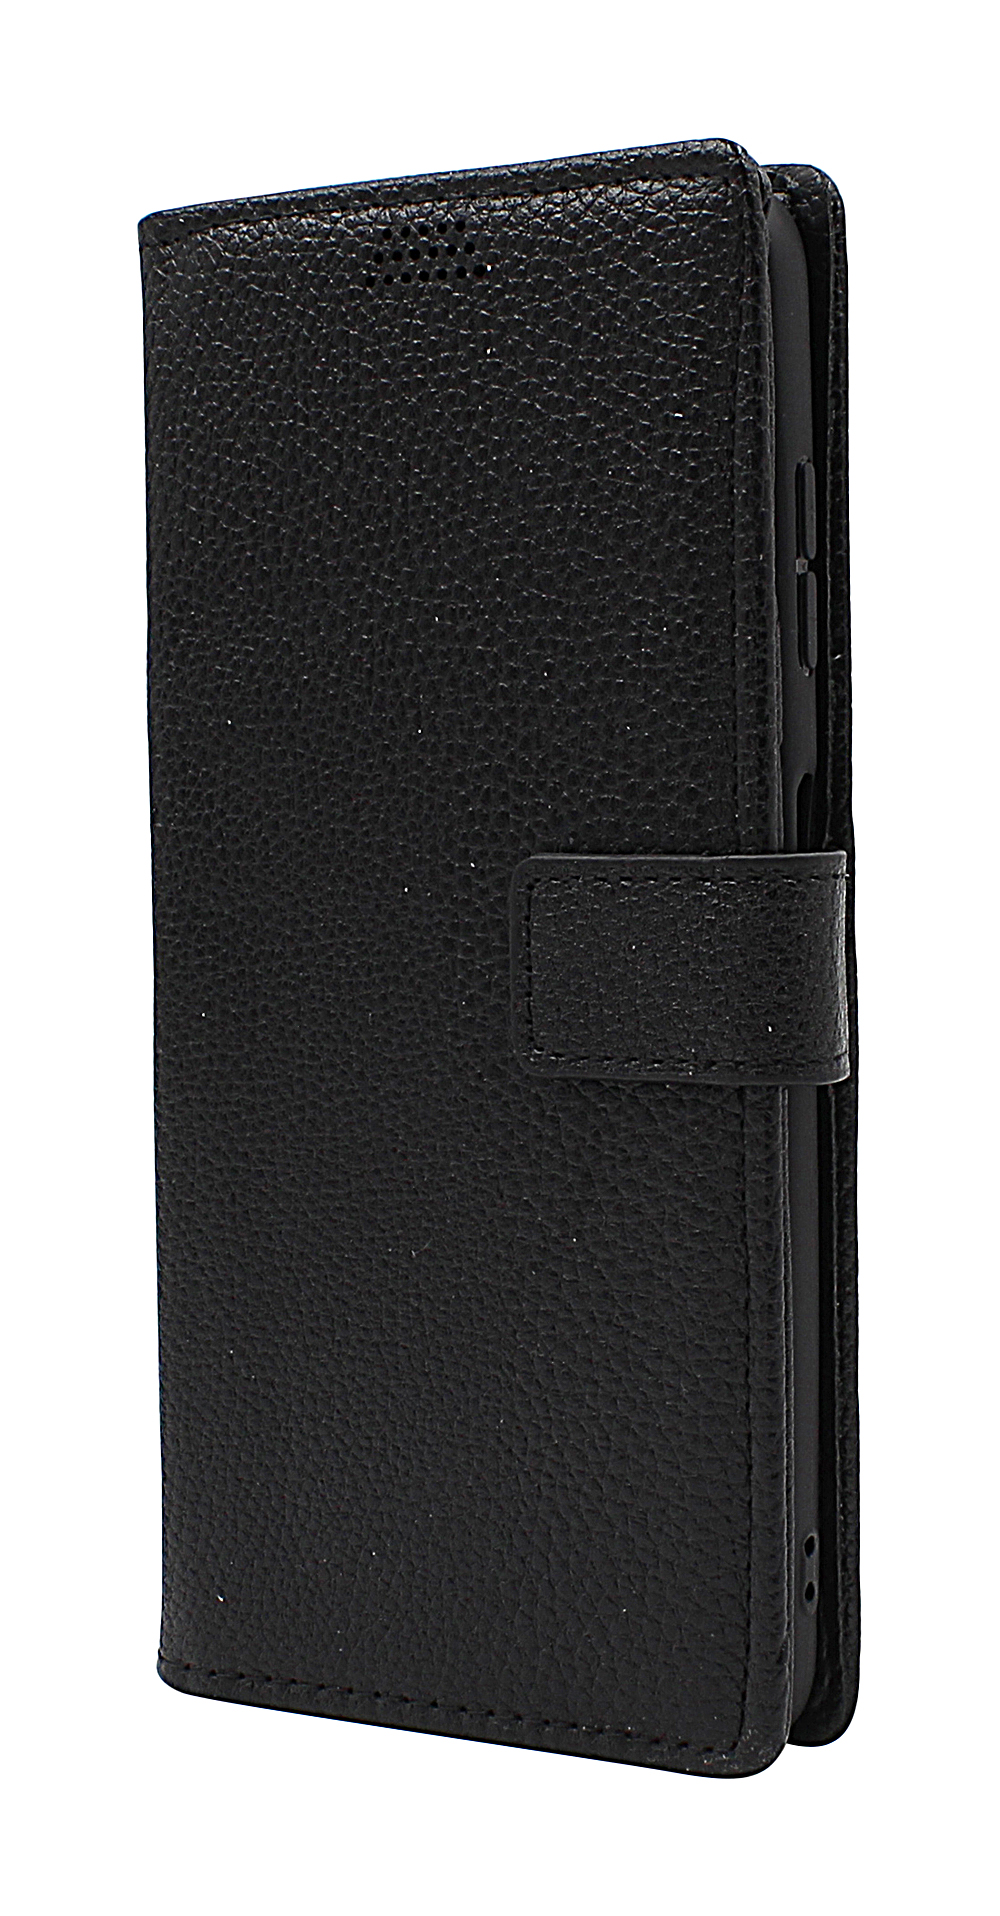 New Standcase Wallet Nokia G11 / G21